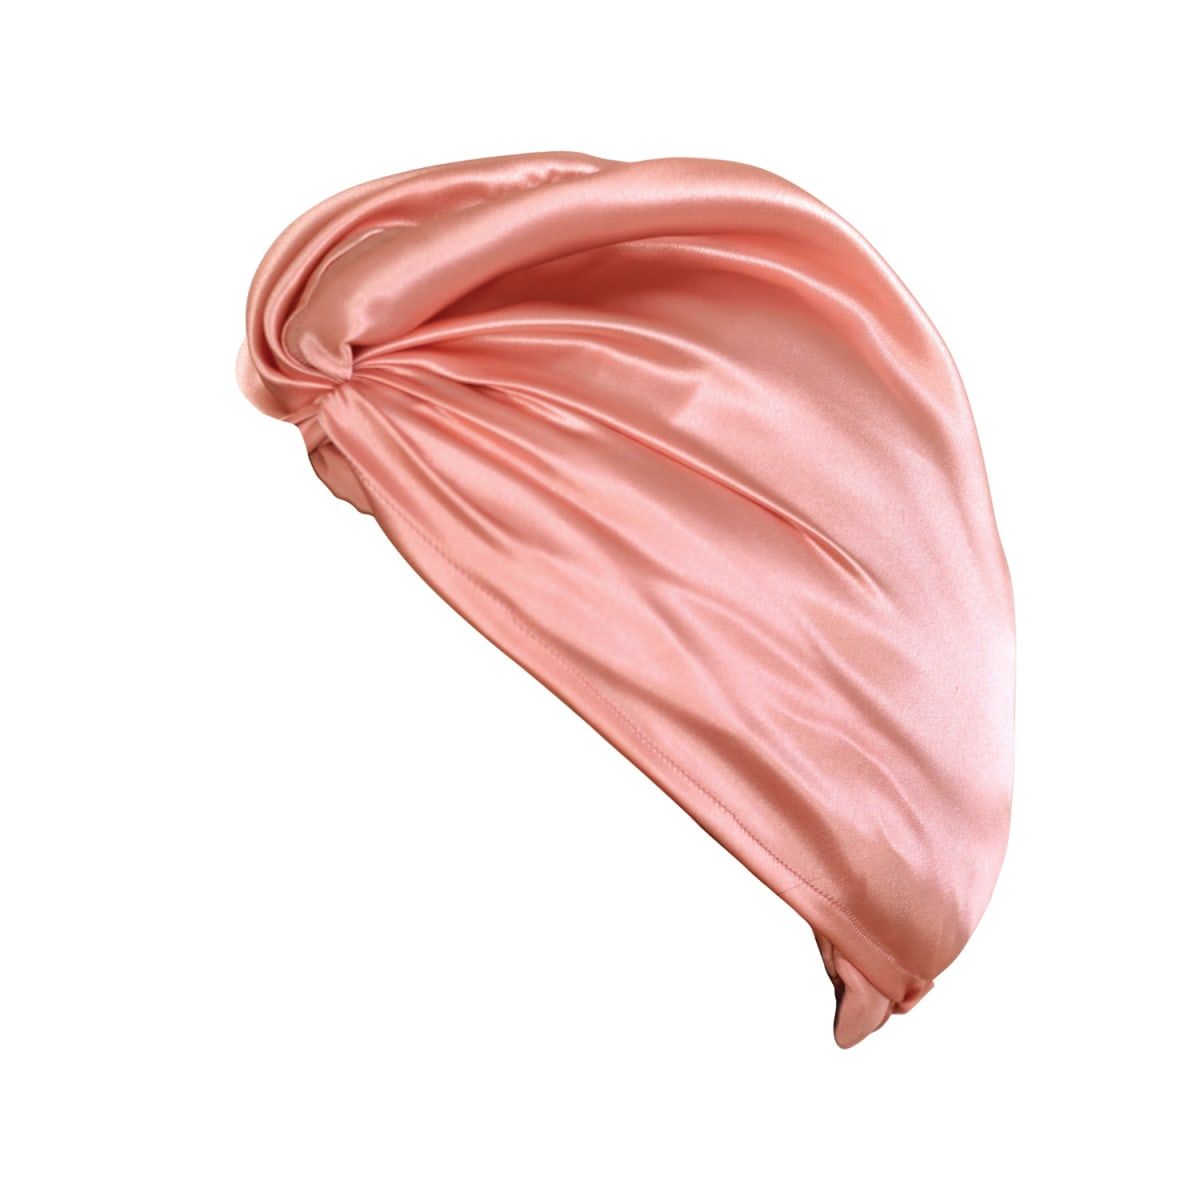 Silk hair wraps | How to use a silk turban for hair